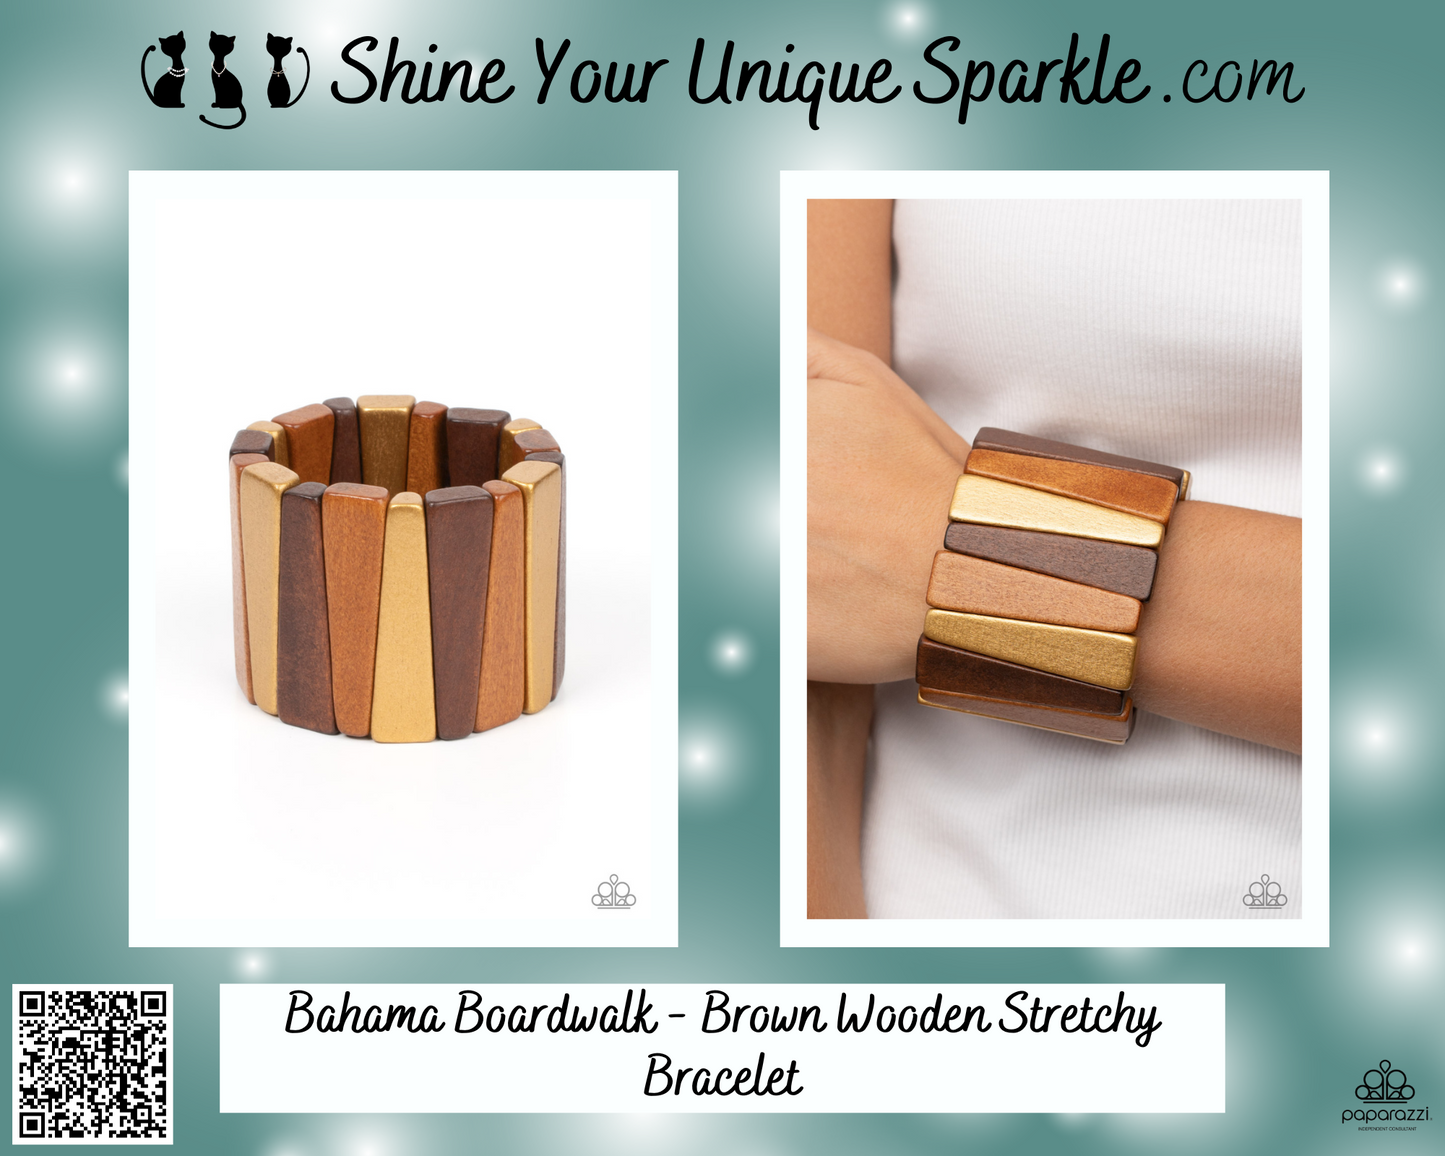 Bahama Boardwalk - Brown Wooden Stretchy Bracelet